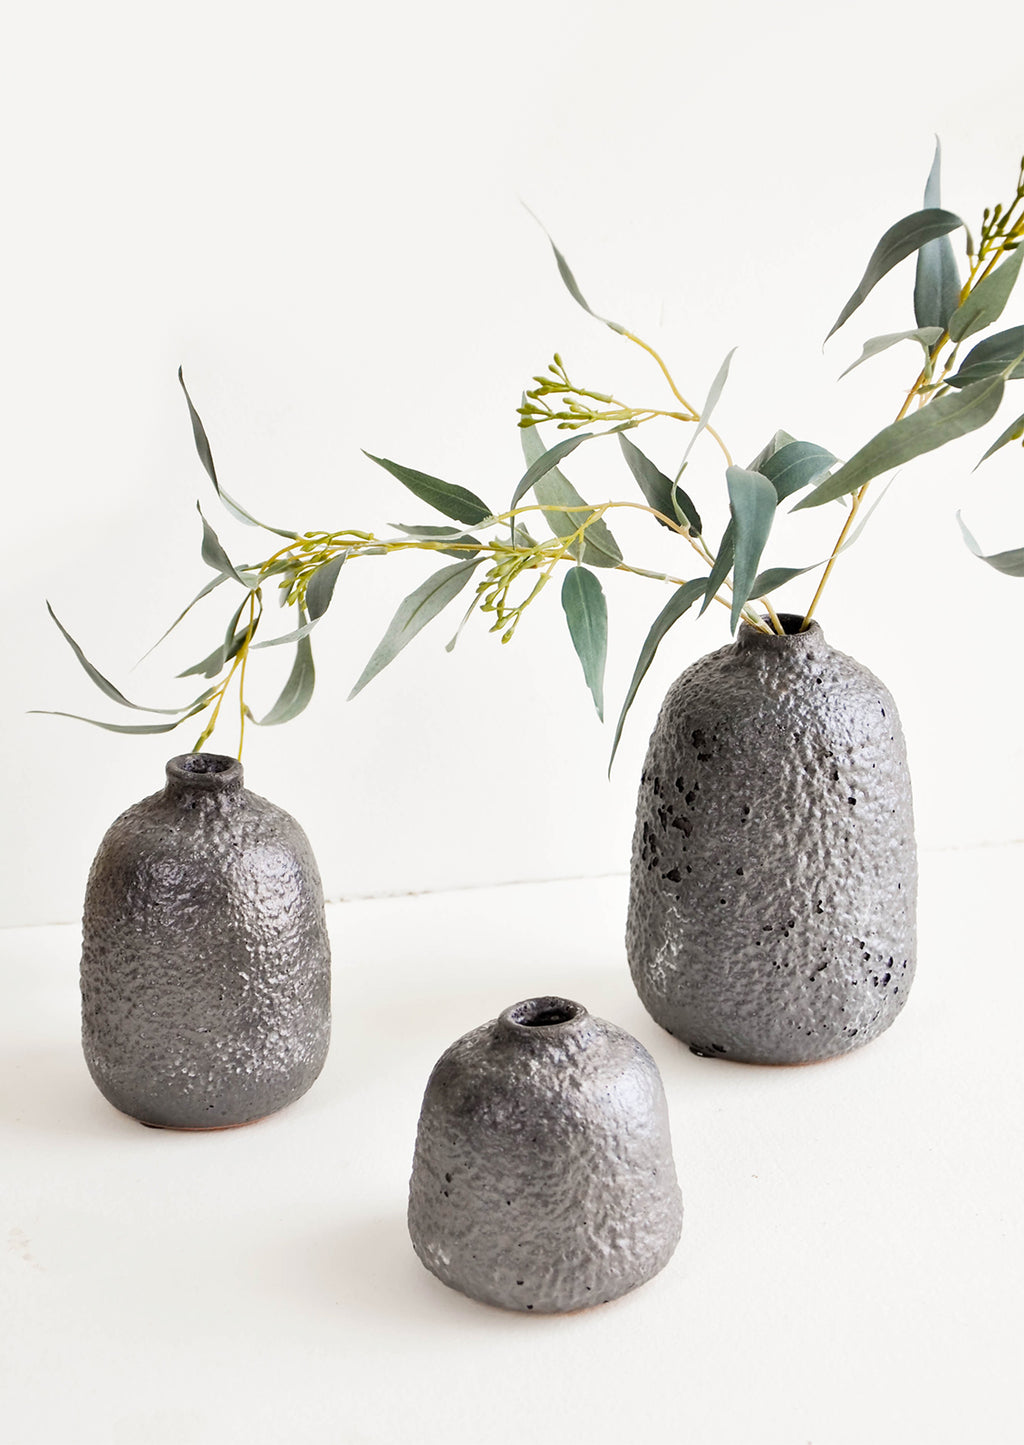 2: Group shot of heavily textured ceramic bud vases in dark metallic grey, styled with eucalyptus stem - LEIF